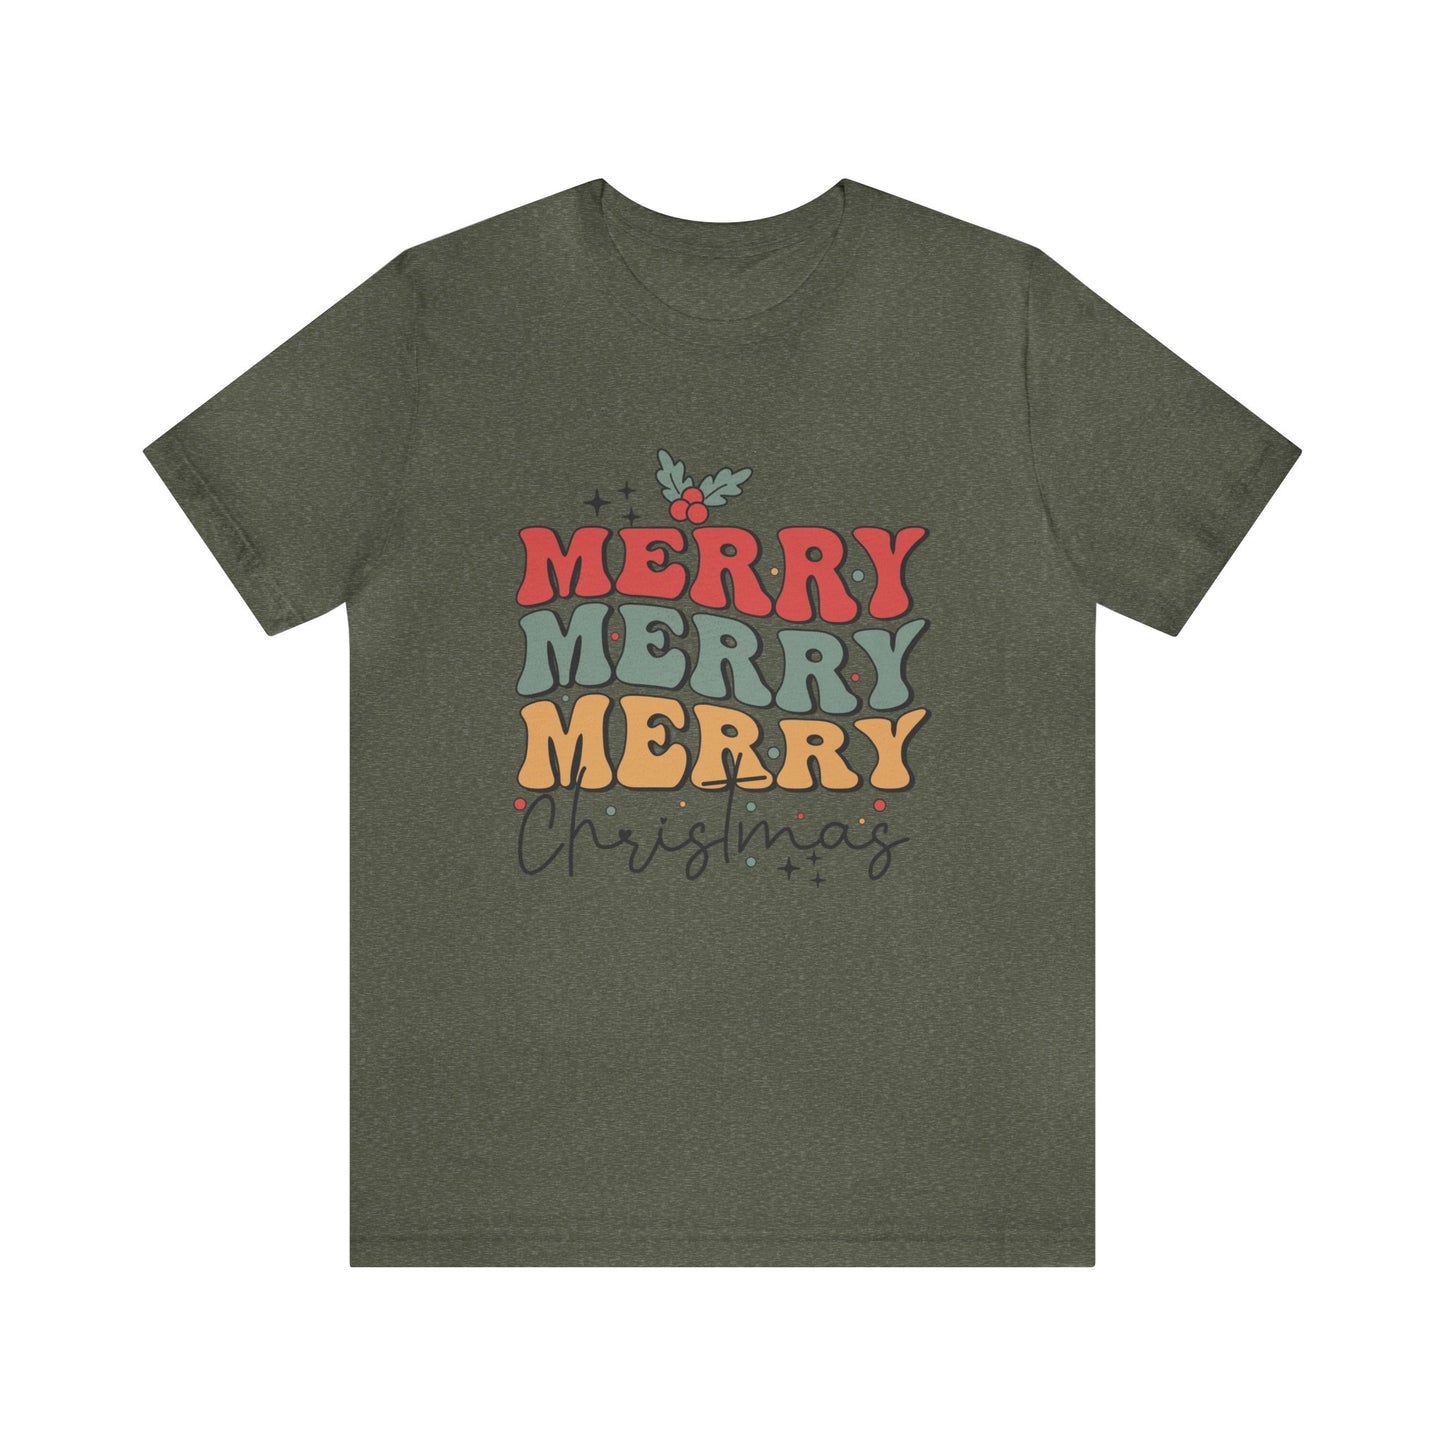 Merry Merry Merry Christmas Women's Short Sleeve Christmas T Shirt